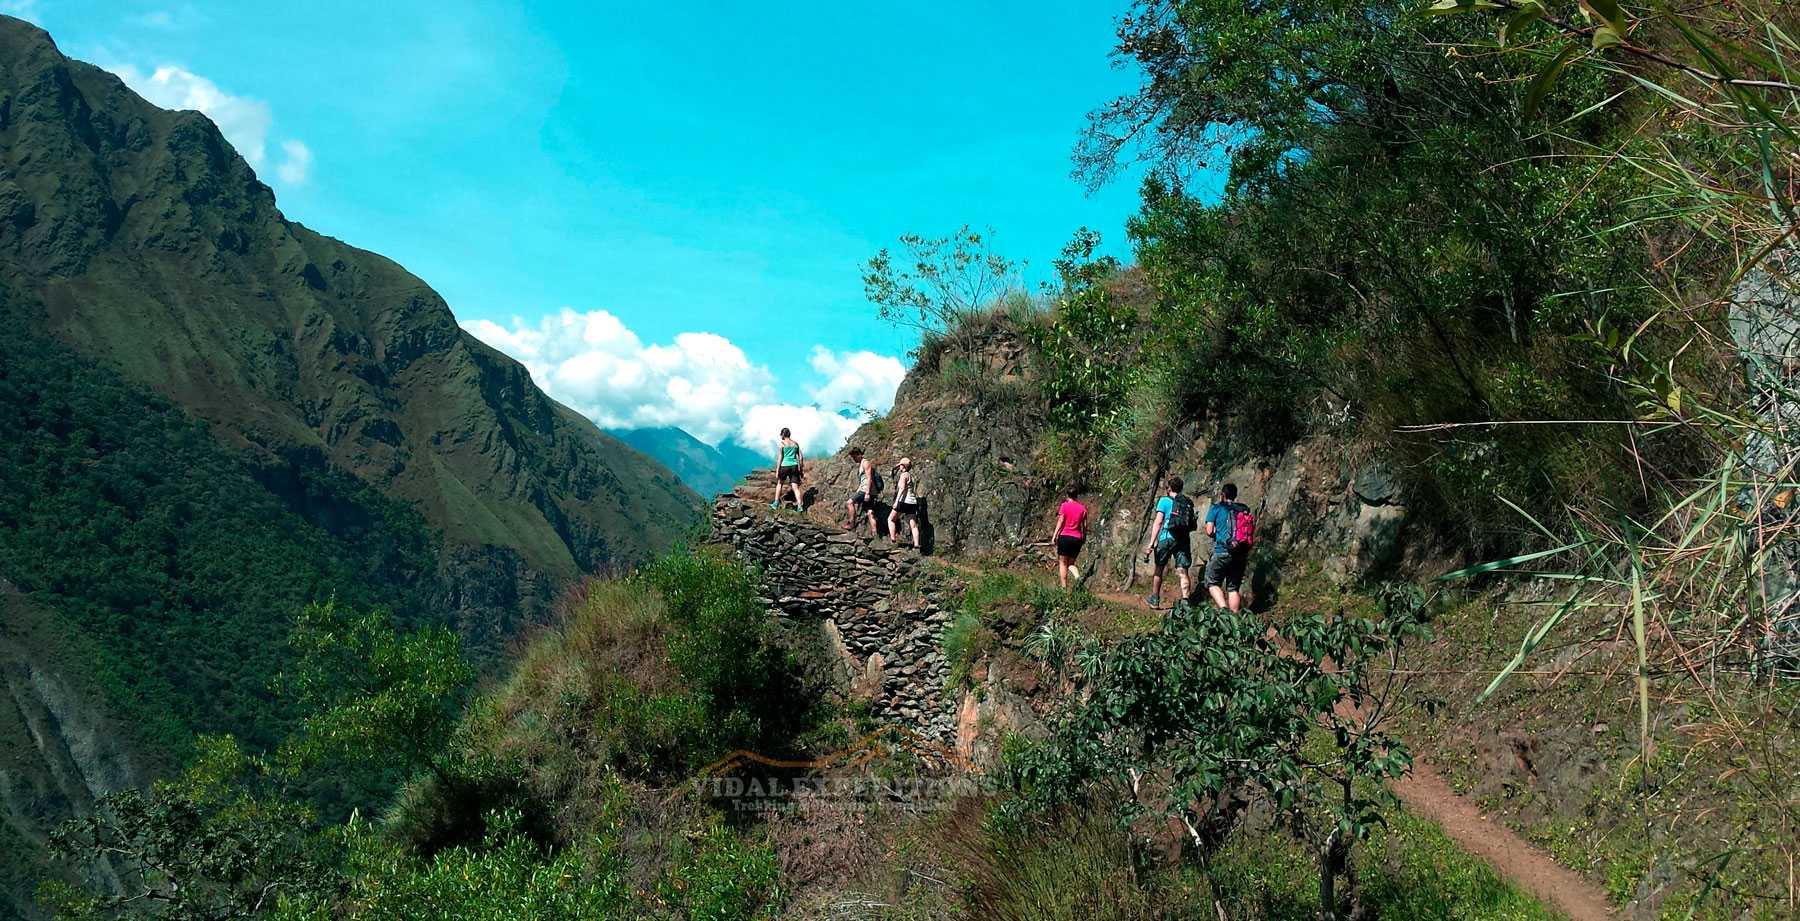 Nice view on the Inca Trail to Machu Picchu